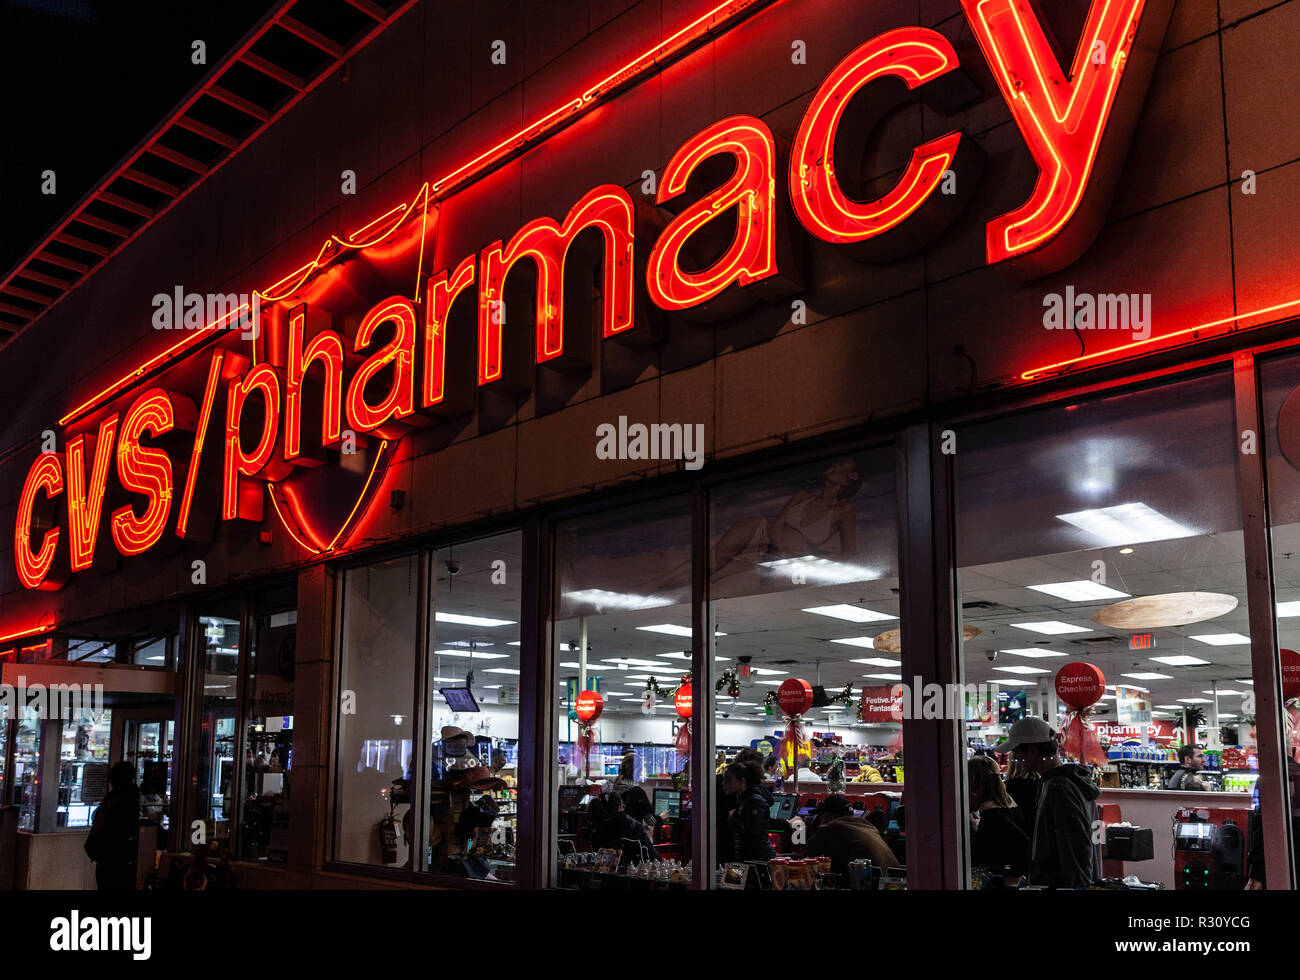 Large and luminous CVS/pharmacy sign across storefront at night, Miami, Florida, USA. Stock Photo